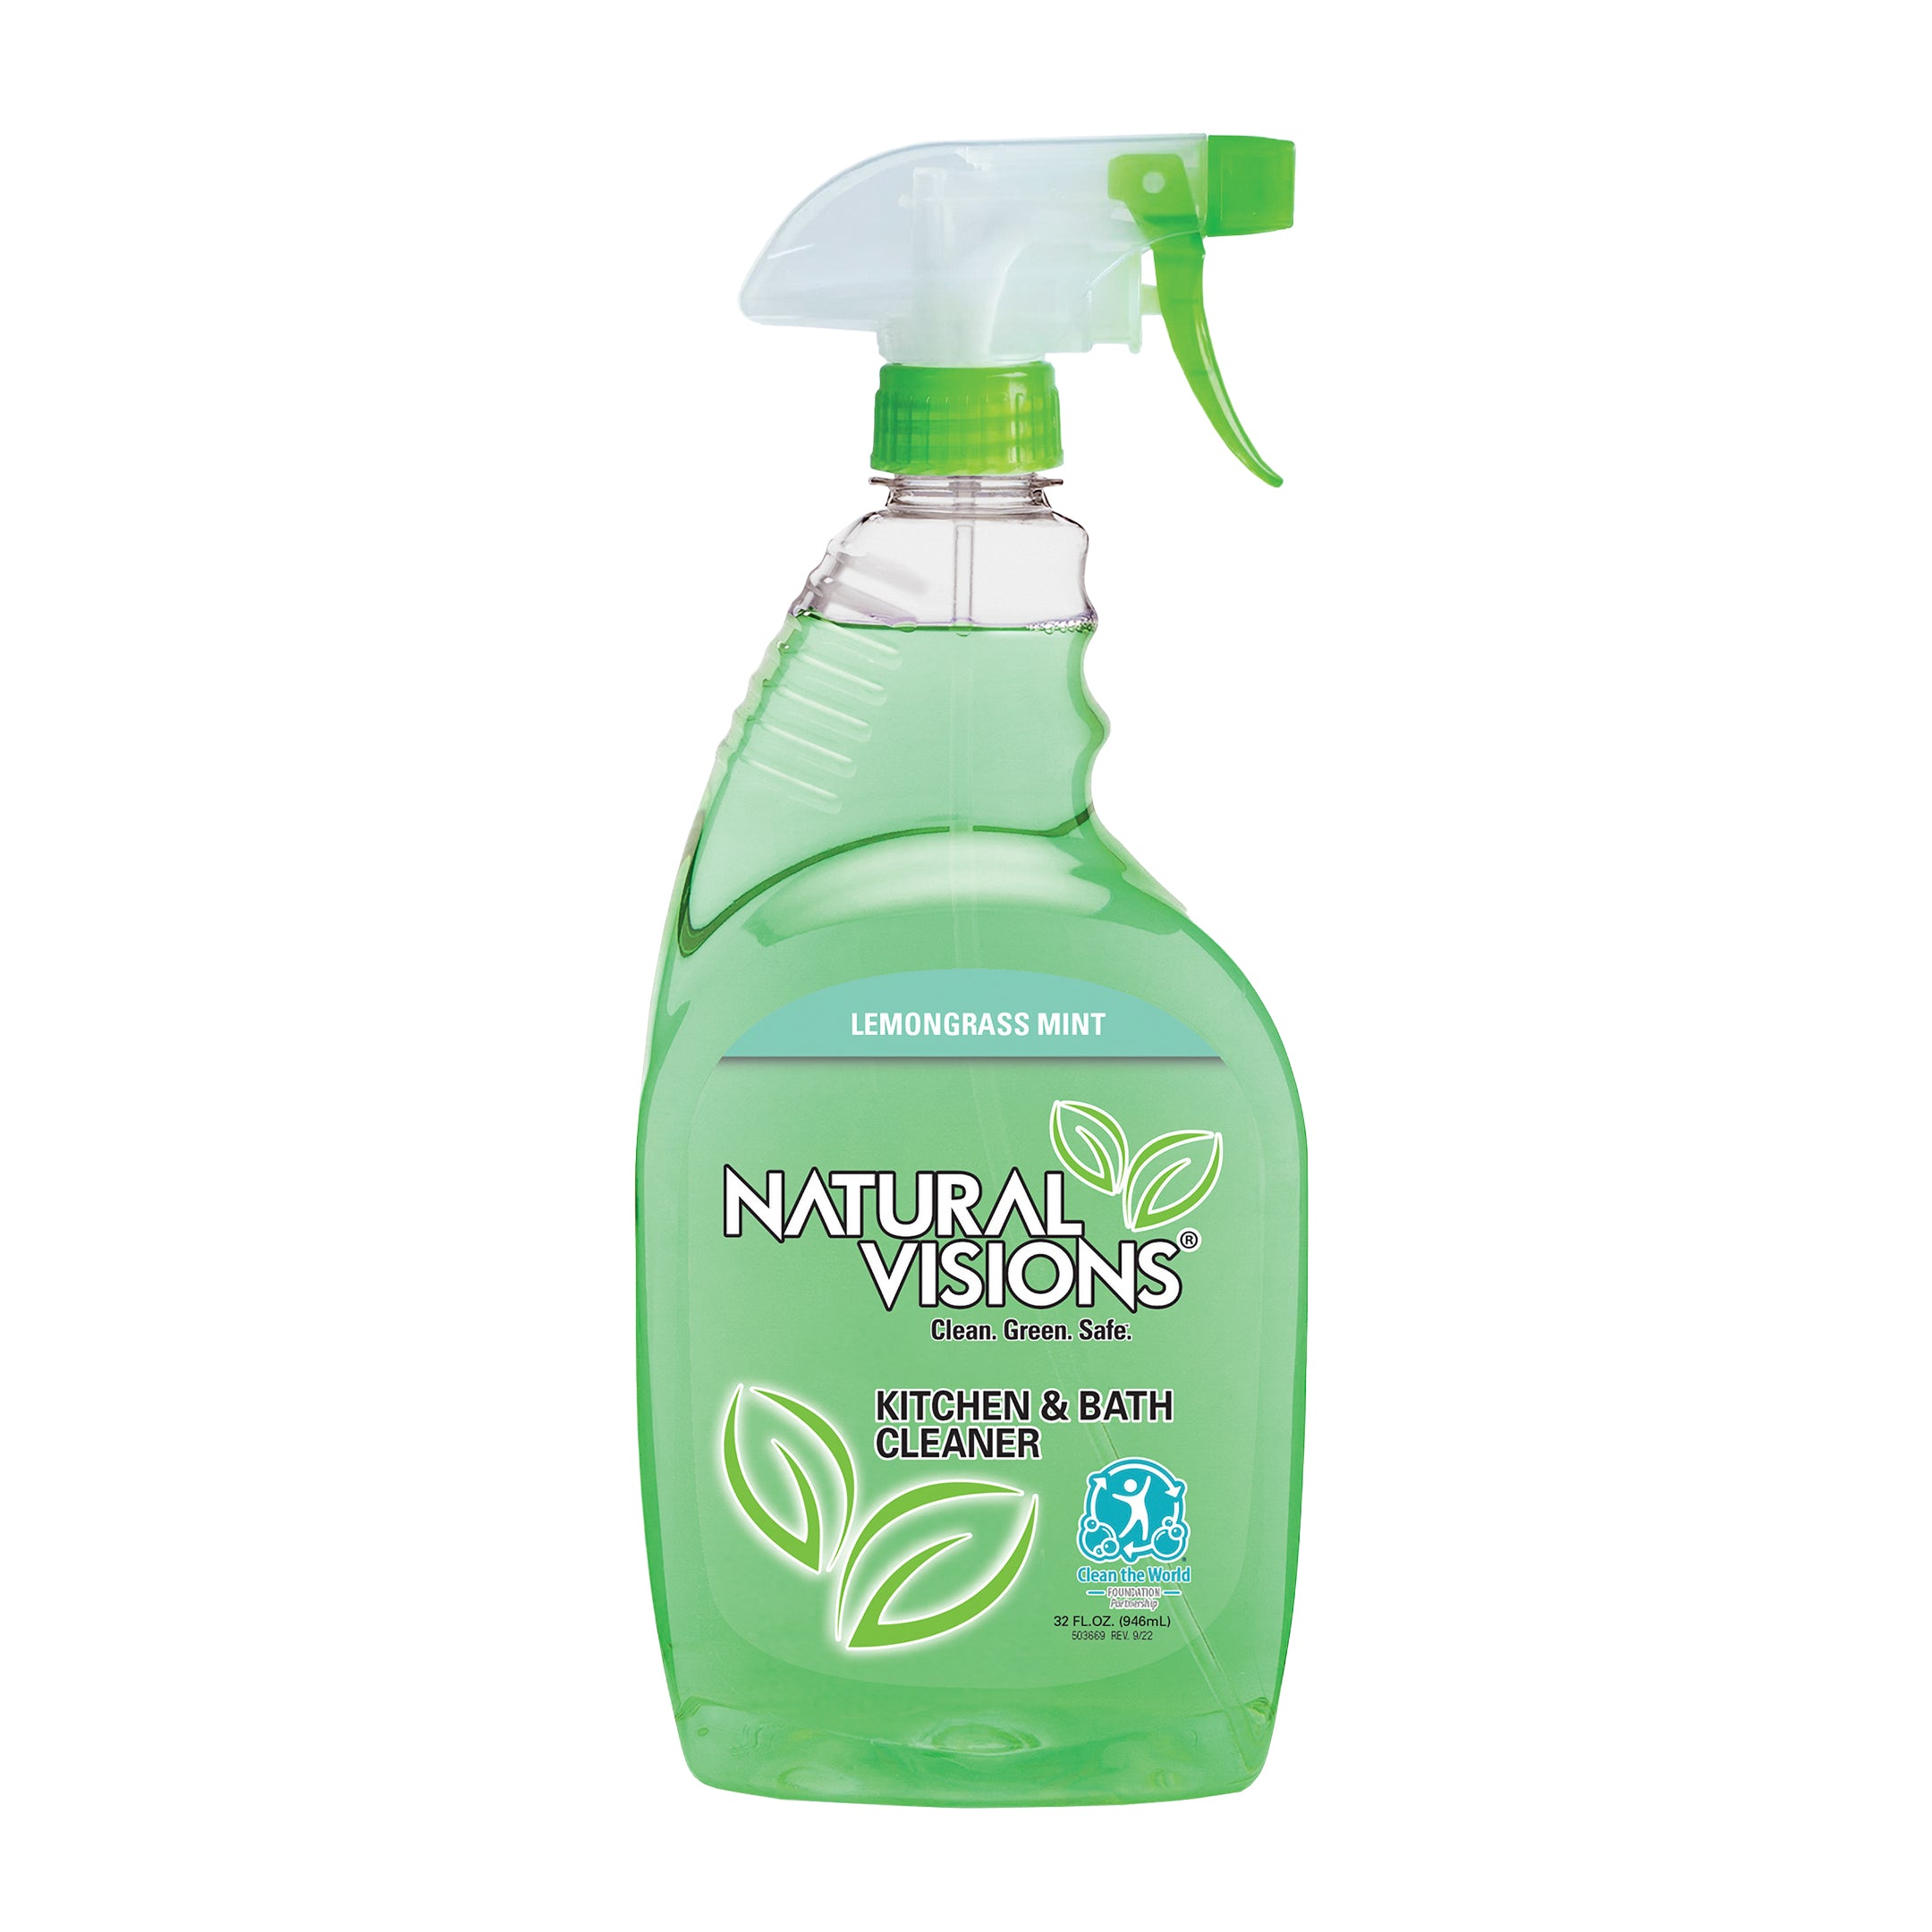 Natural Visions Lemongrass Mint Kitchen & Bath Cleaner - 32oz/6pk